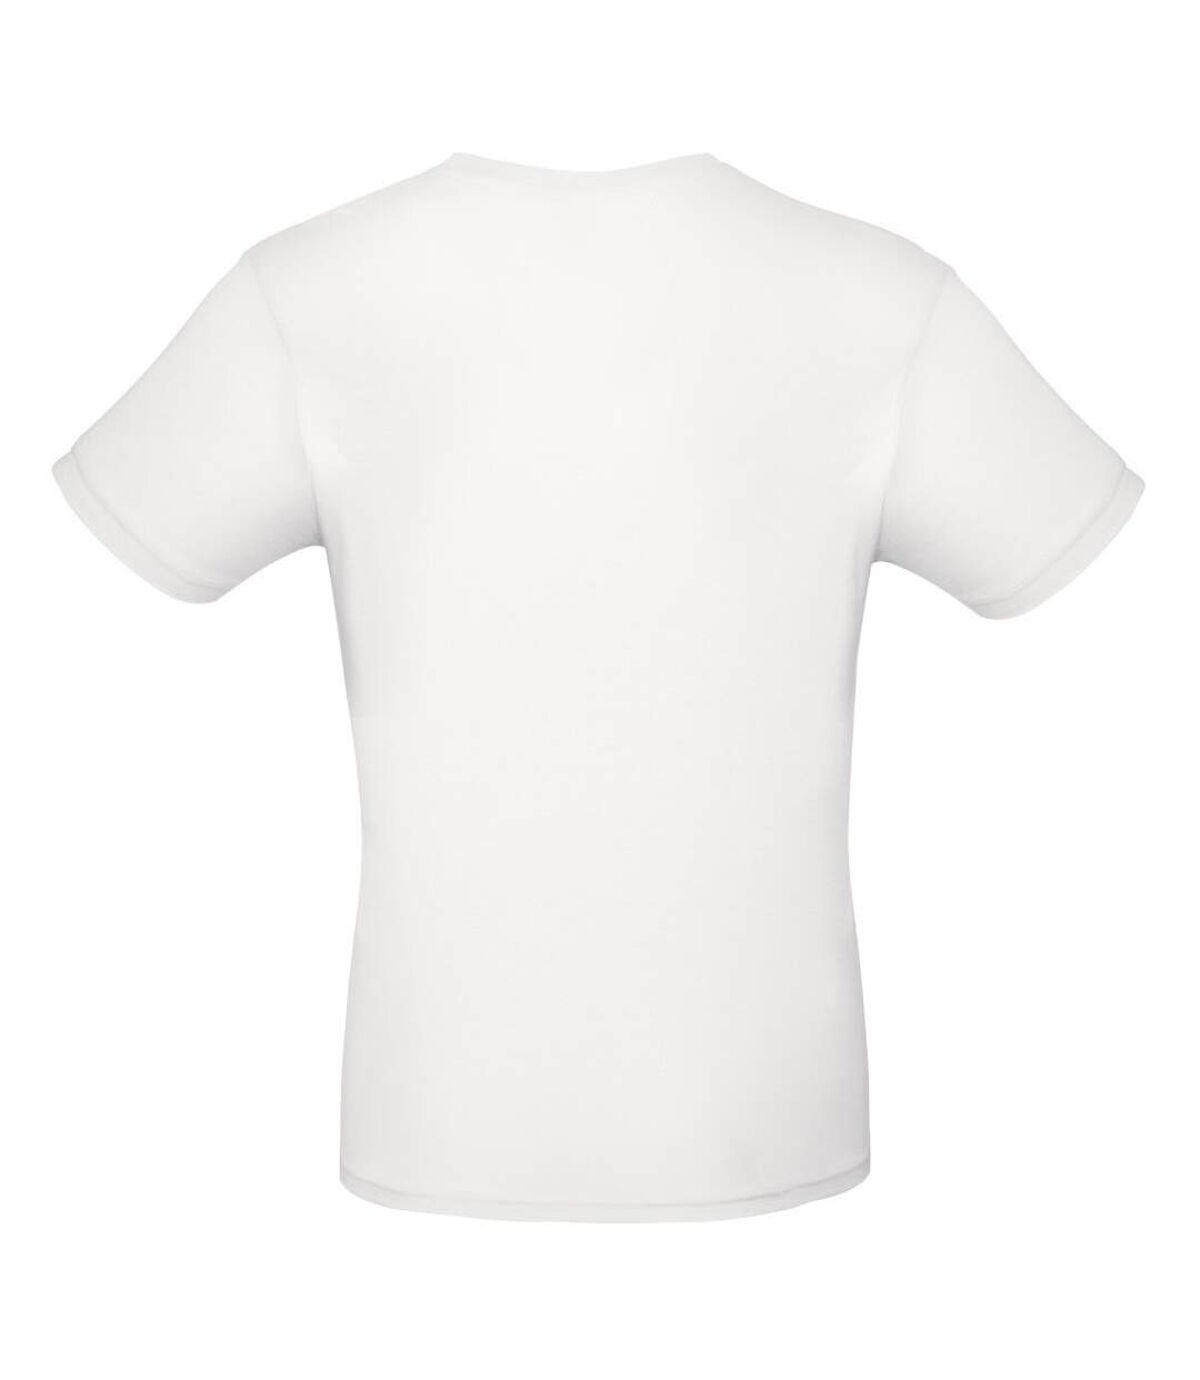 B&C - T-shirt manches courtes - Homme (Blanc) - UTBC3910